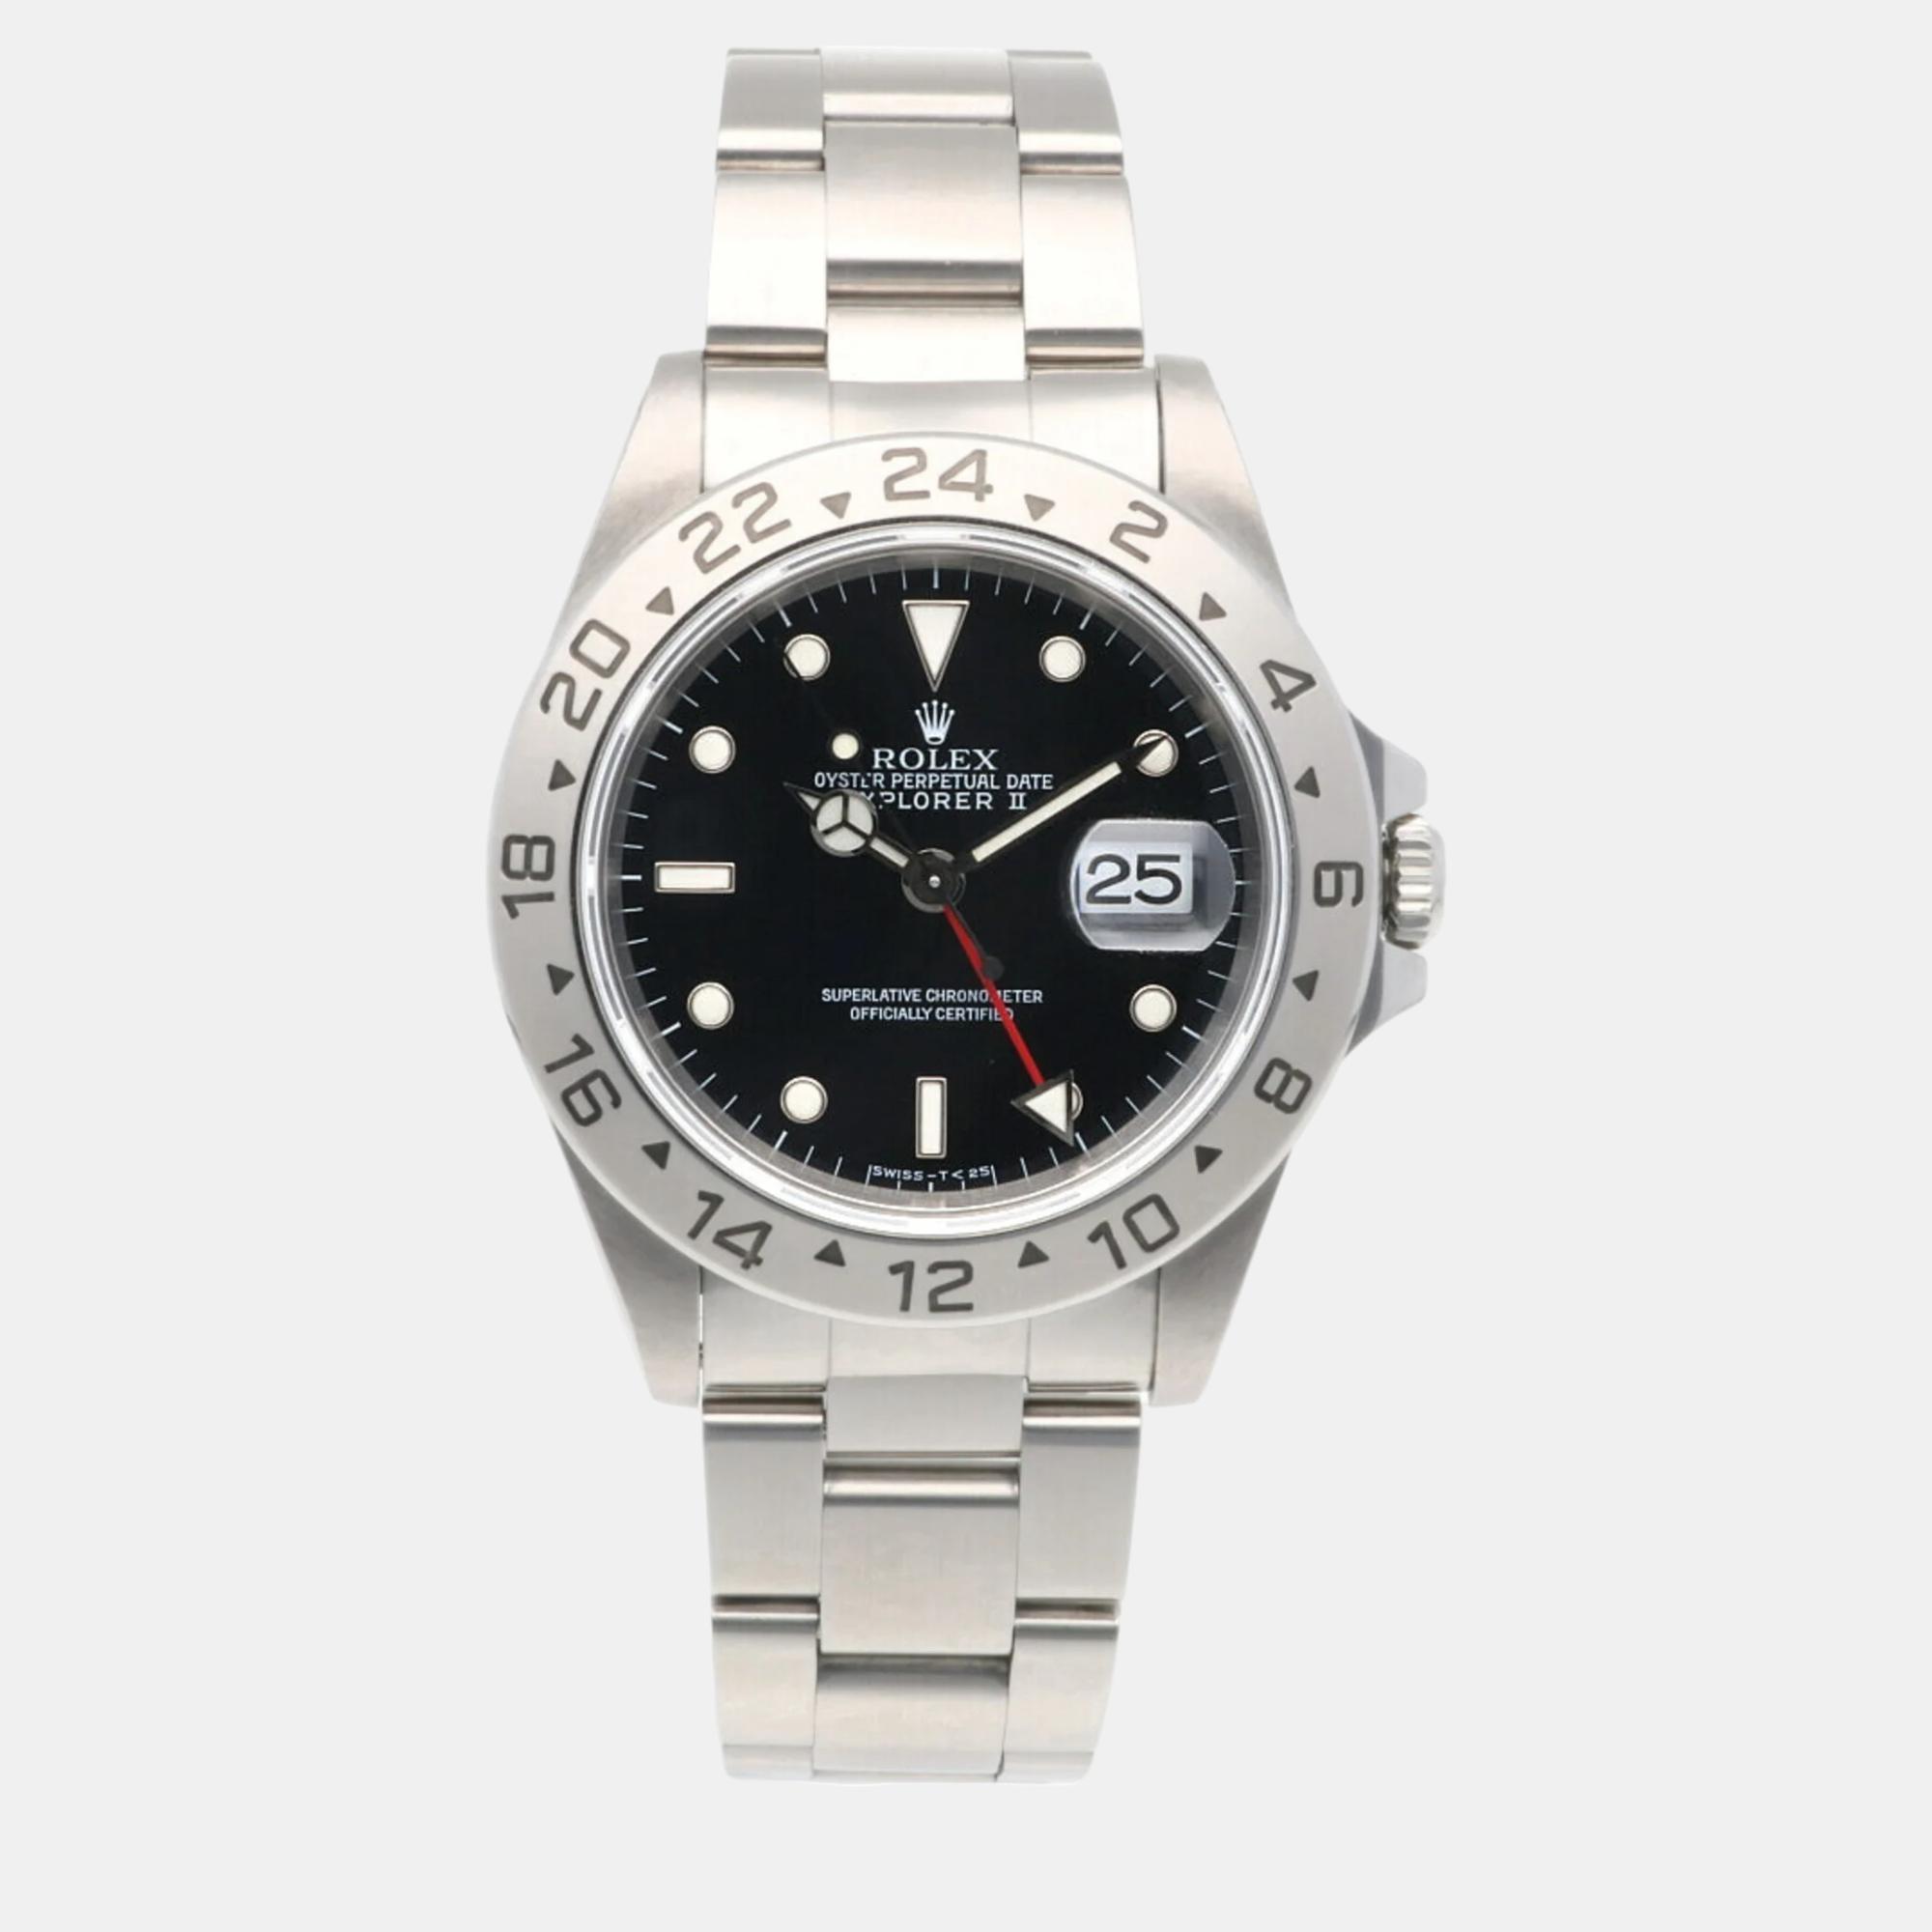 Rolex black stainless steel explorer ii 16570 automatic men's wristwatch